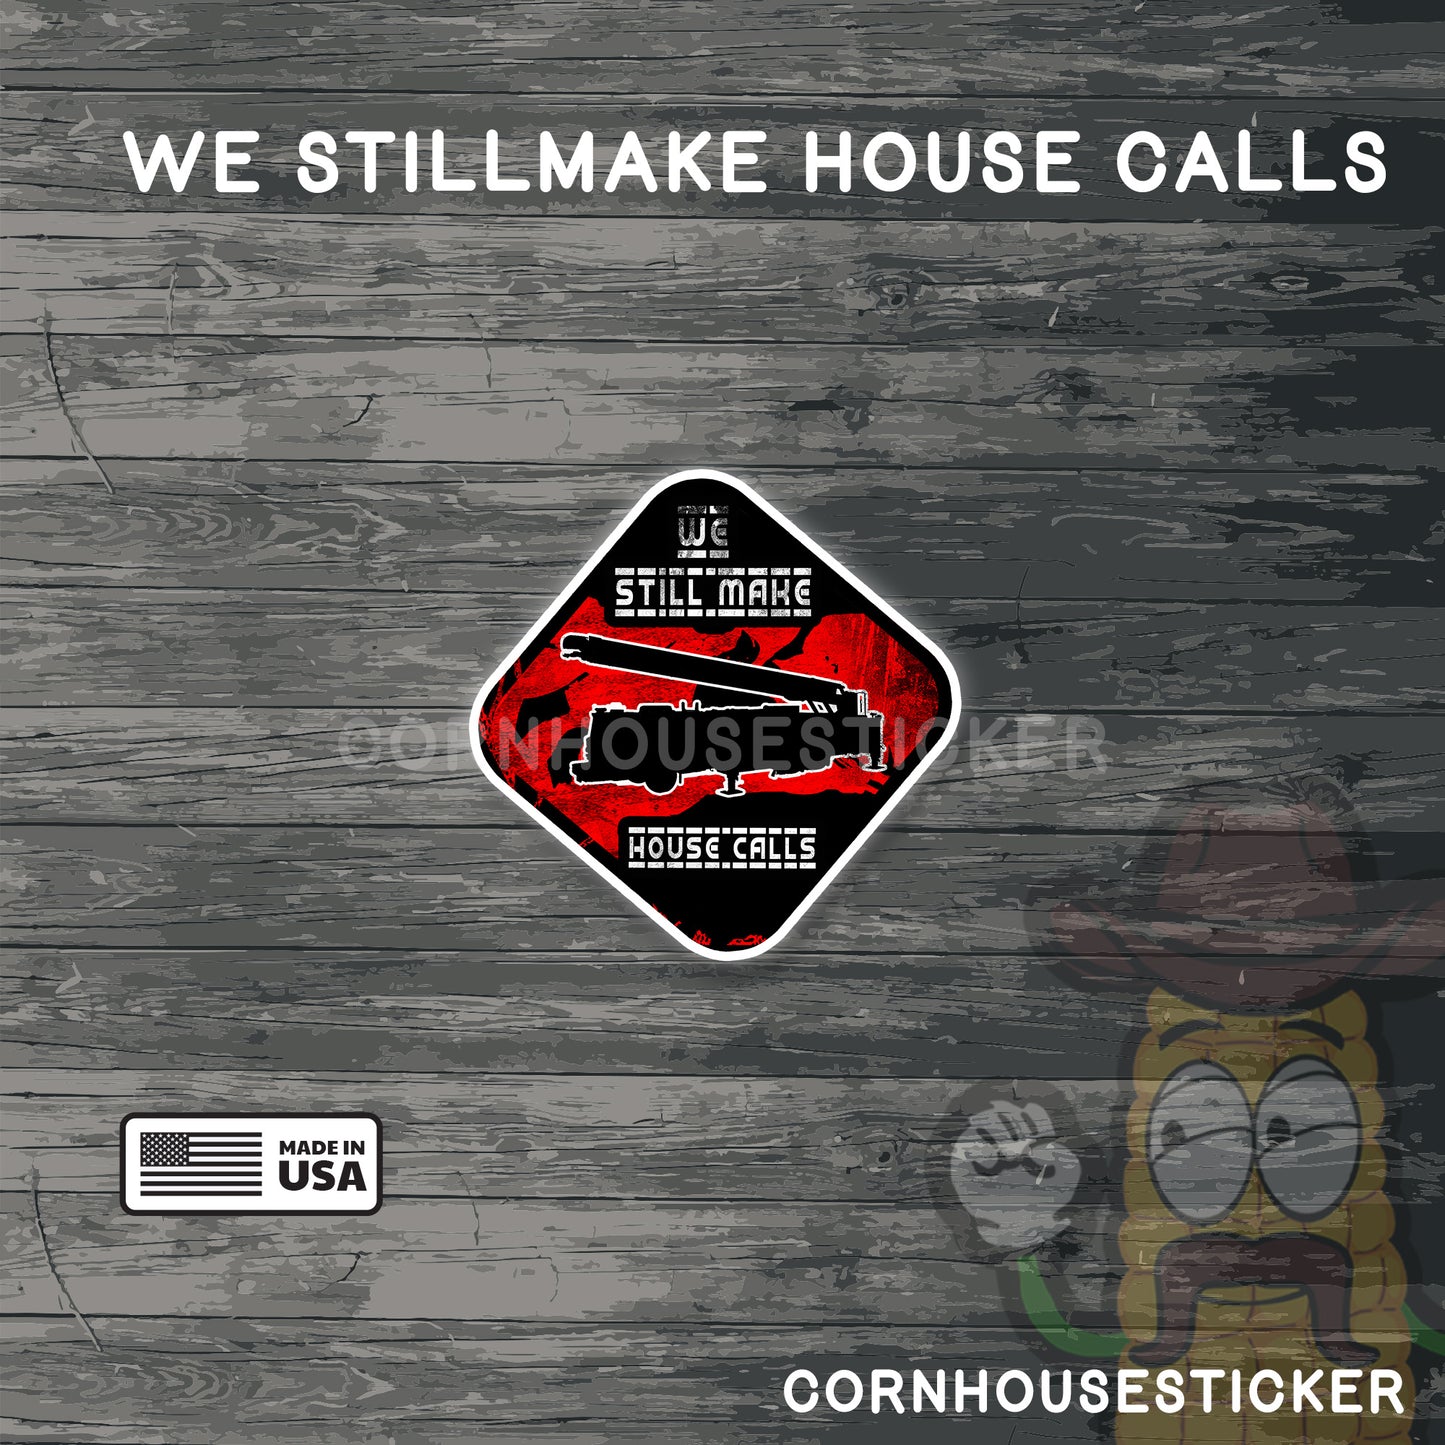 We still make house calls | Firefighter stickers